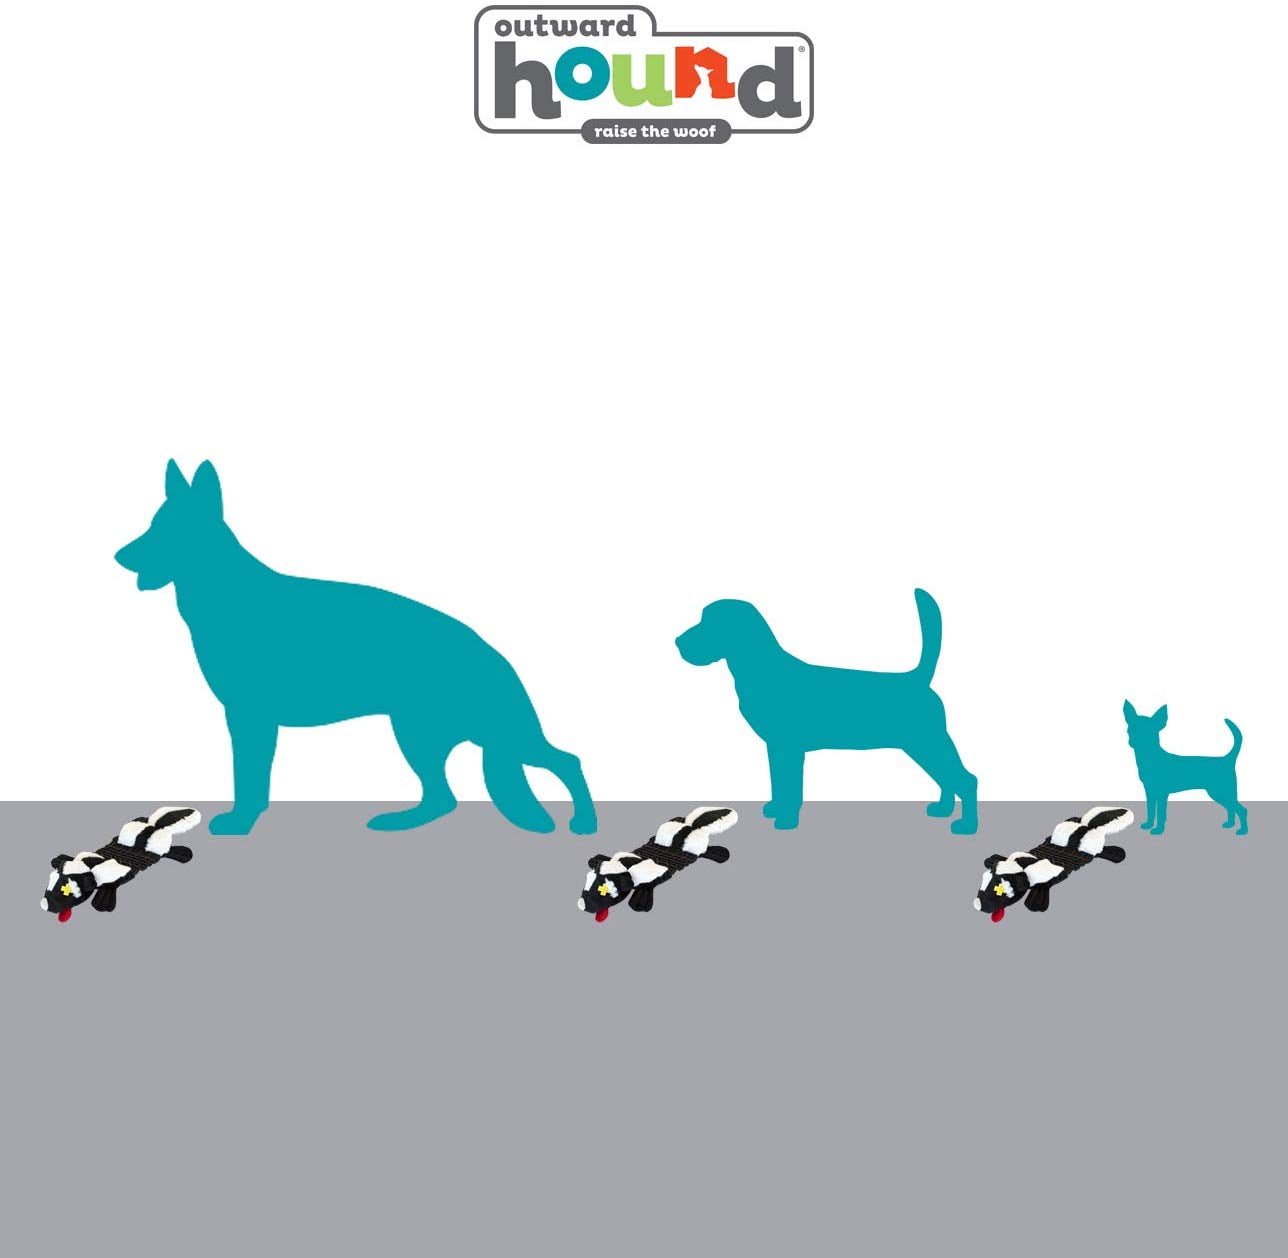 Outward Hound Invincibles Mini Dog - Shop Plush Toys at H-E-B